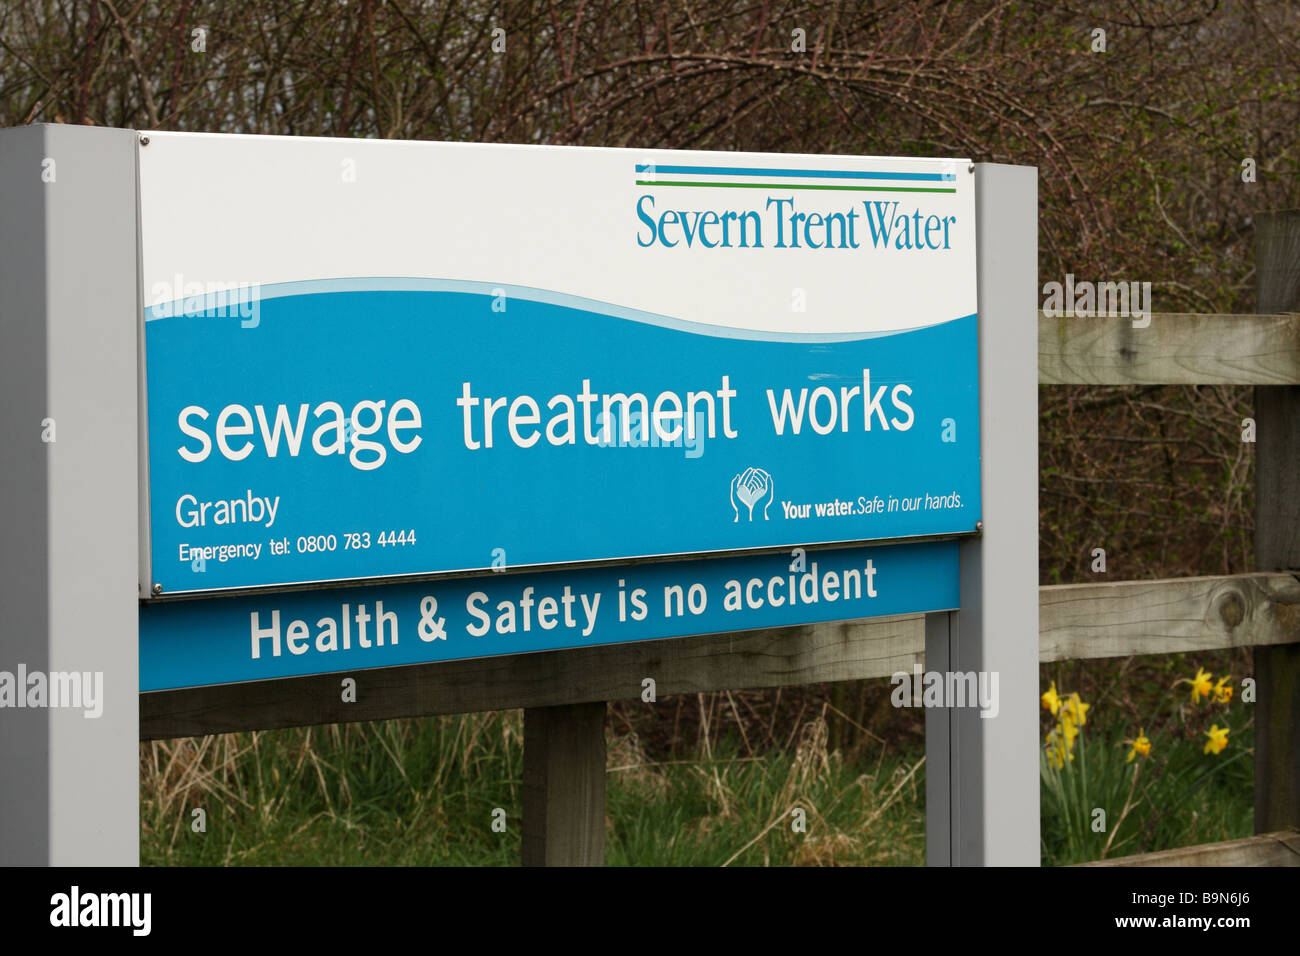 Severn Trent Water sewage treatment works. Stock Photo